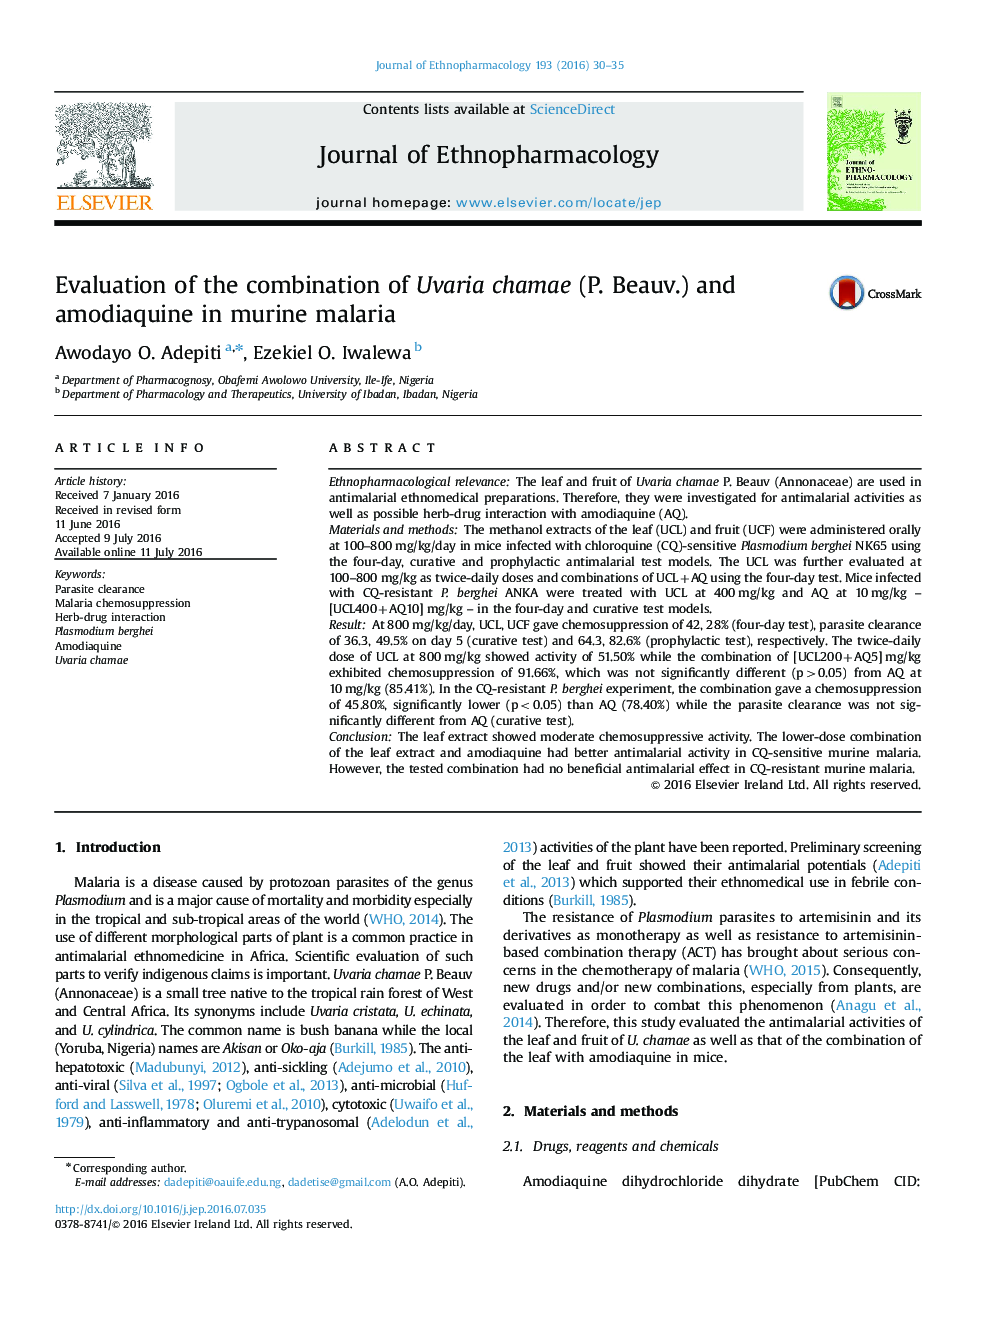 Evaluation of the combination of Uvaria chamae (P. Beauv.) and amodiaquine in murine malaria